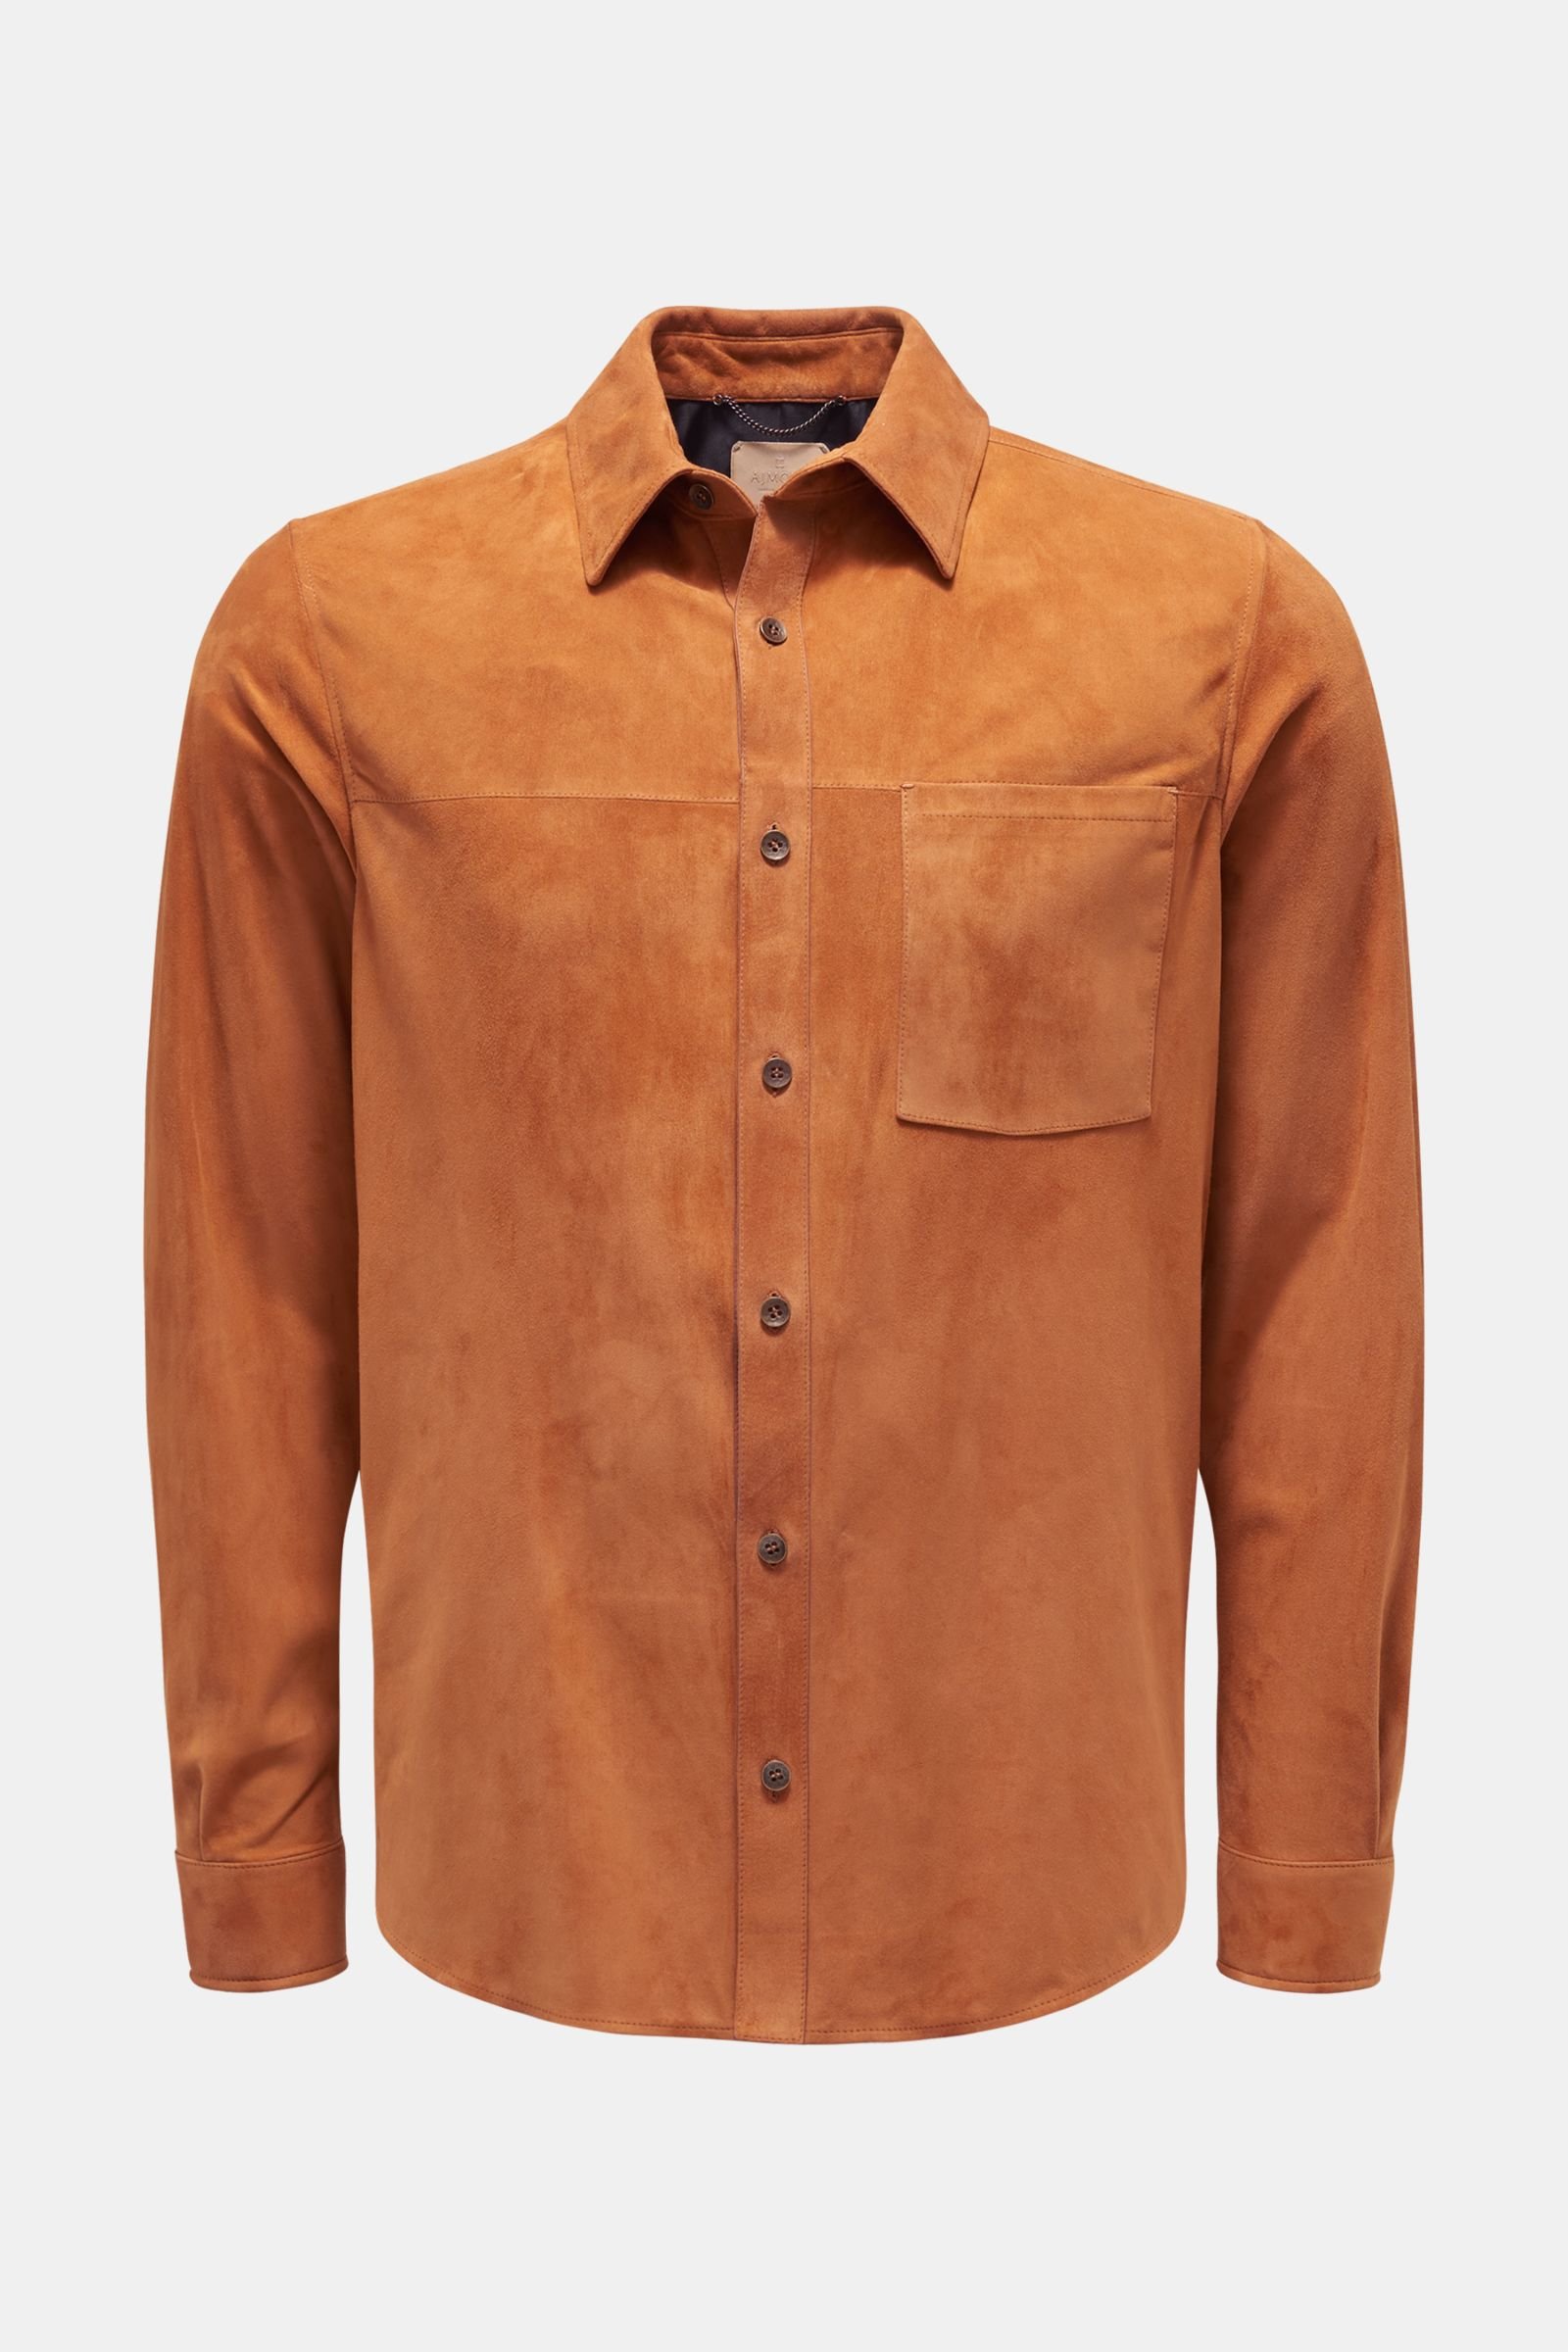 Suede overshirt rust brown